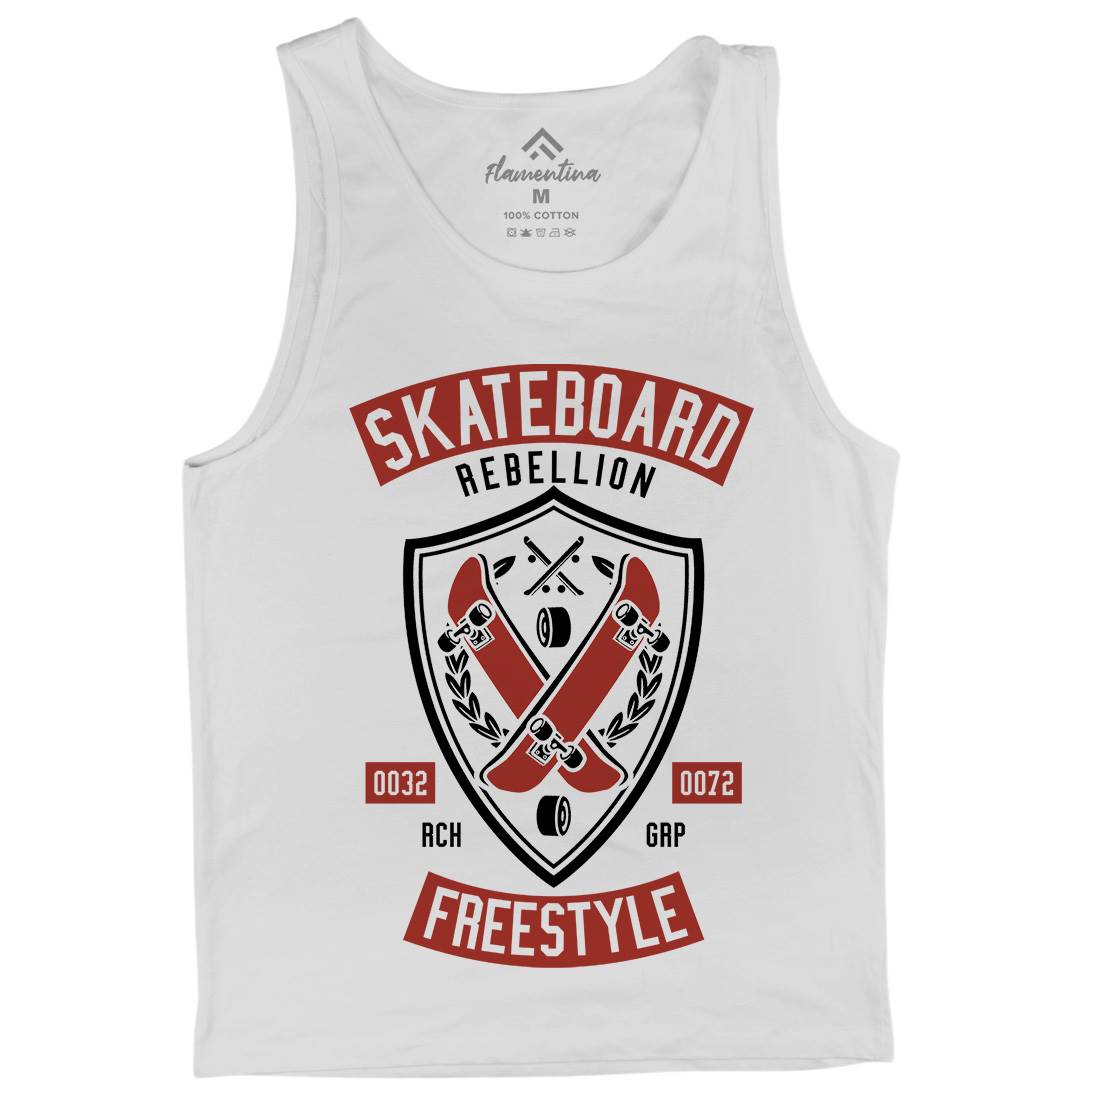 Skateboard Rebellion Mens Tank Top Vest Skate A277